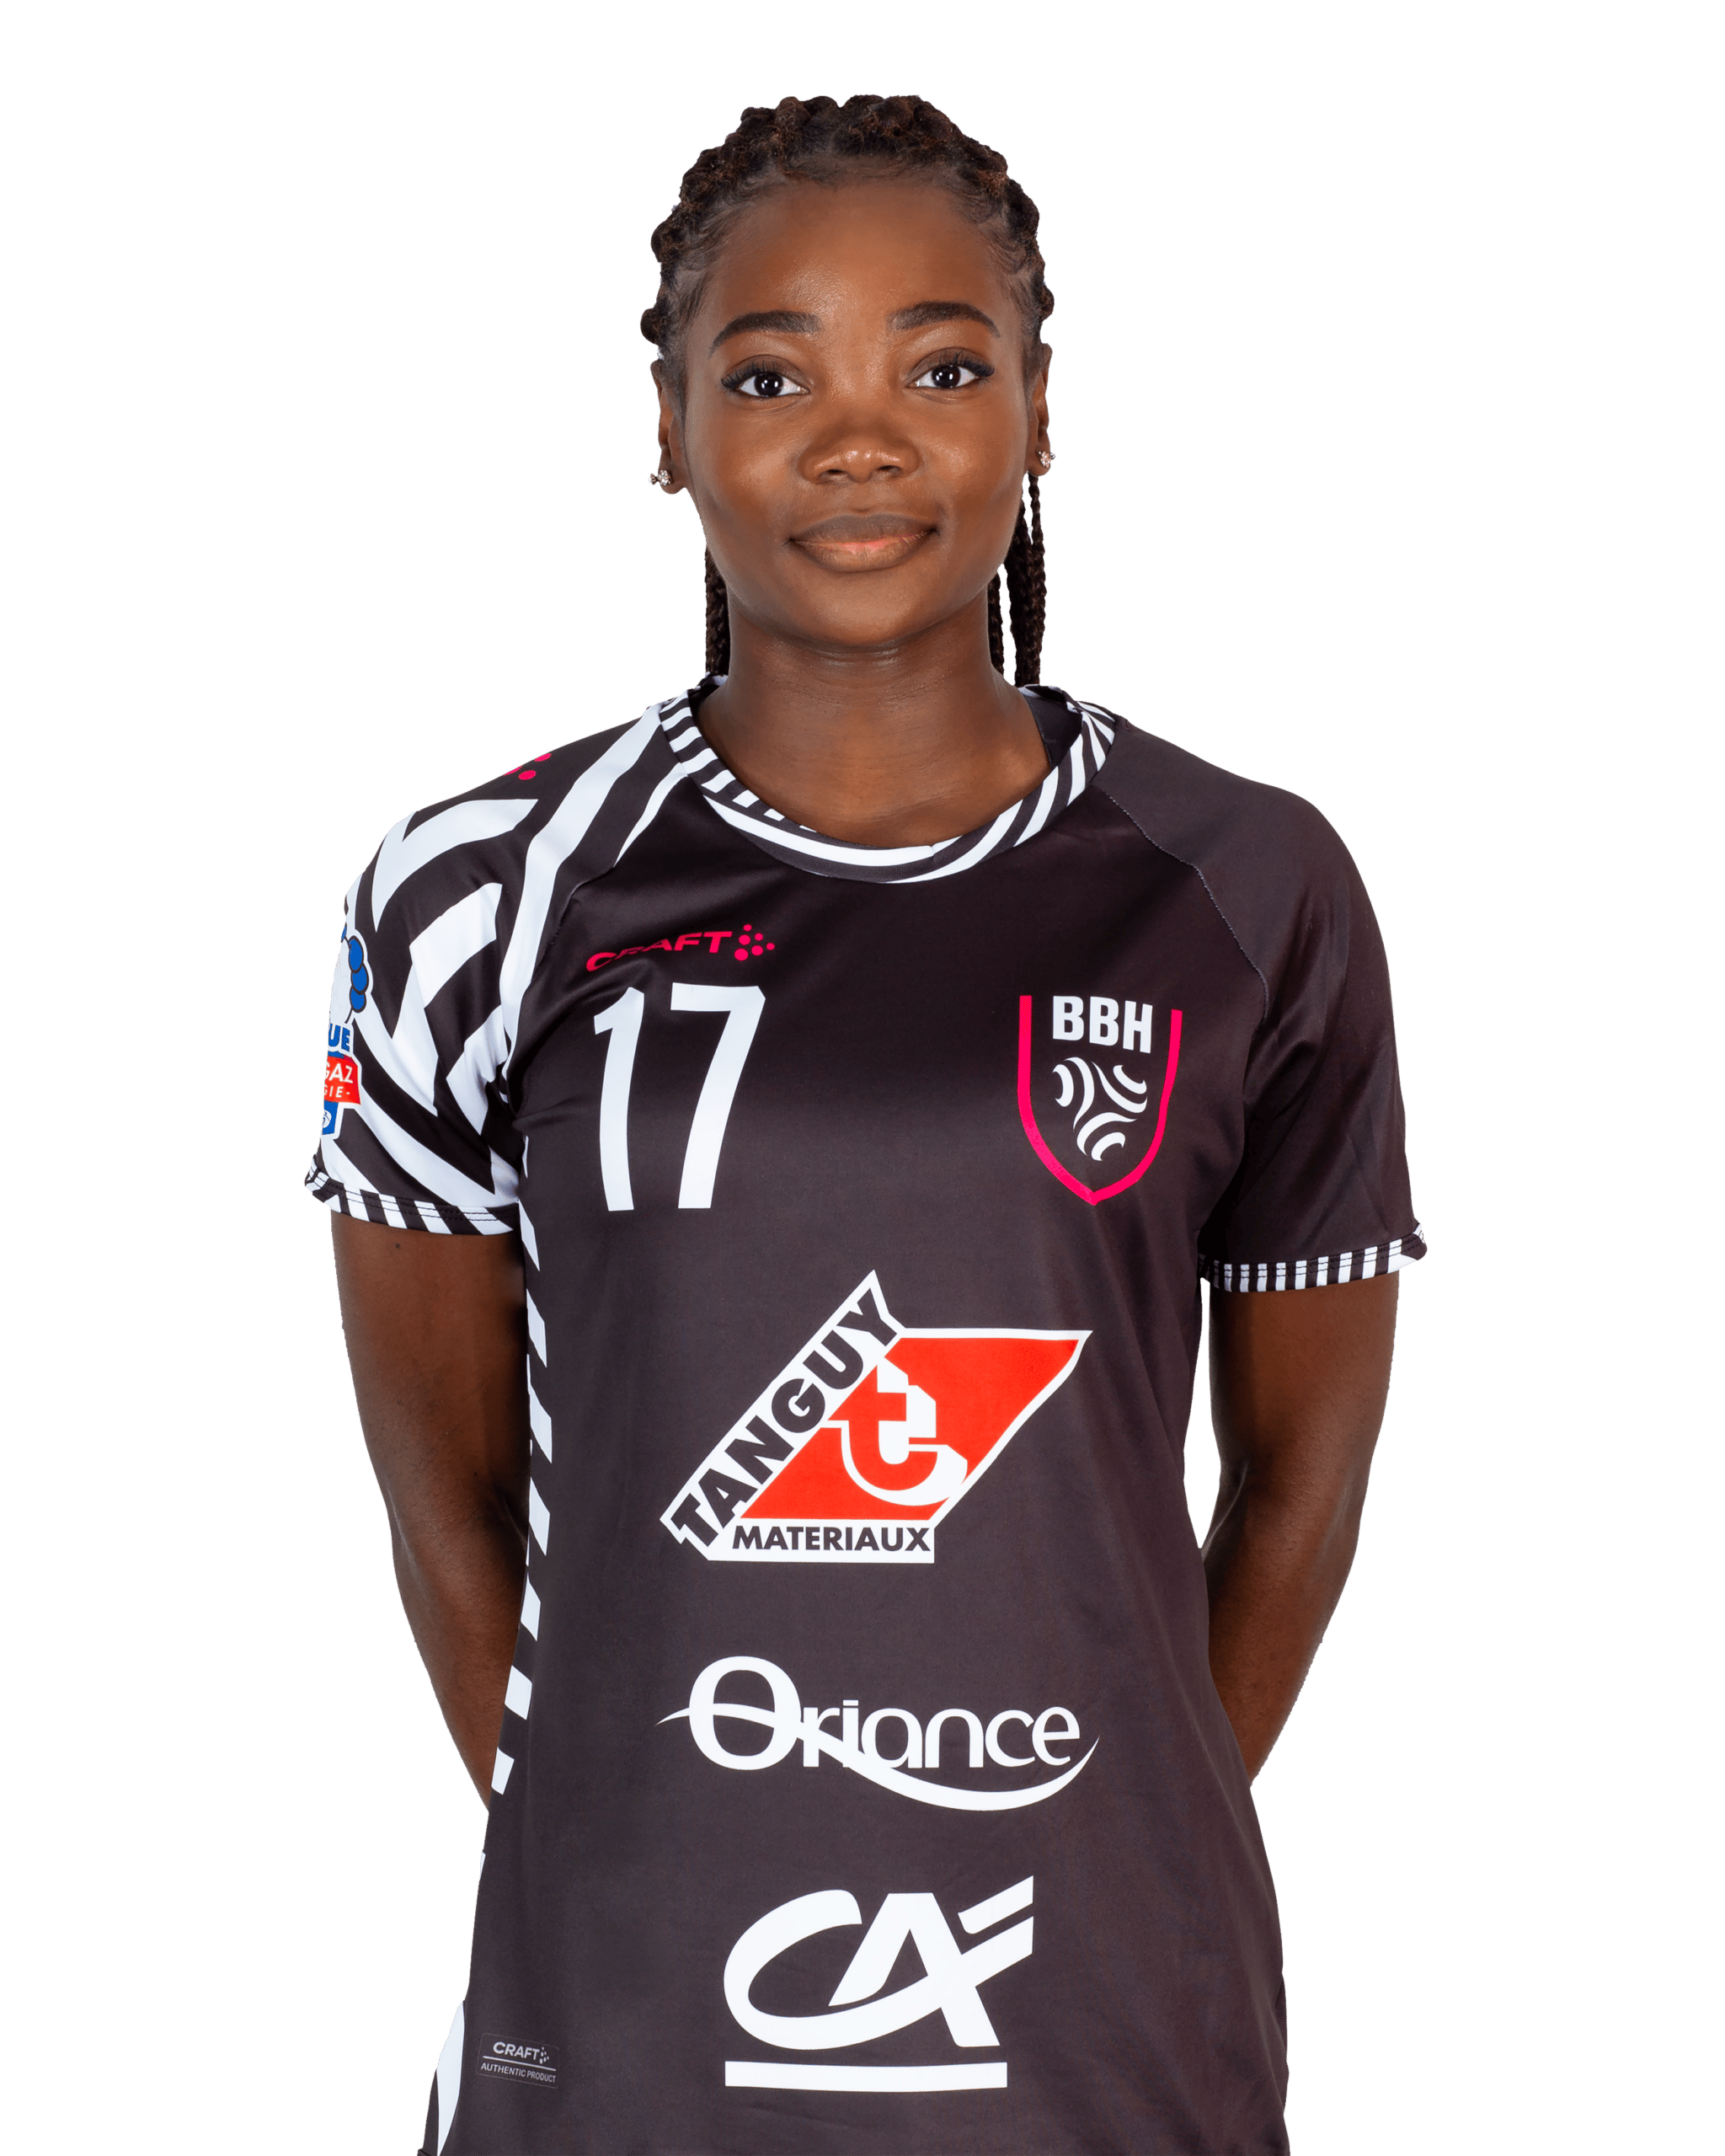 estel-memana - Ailière gauche division 2 féminine de handball de Noisy Le Grand Handball